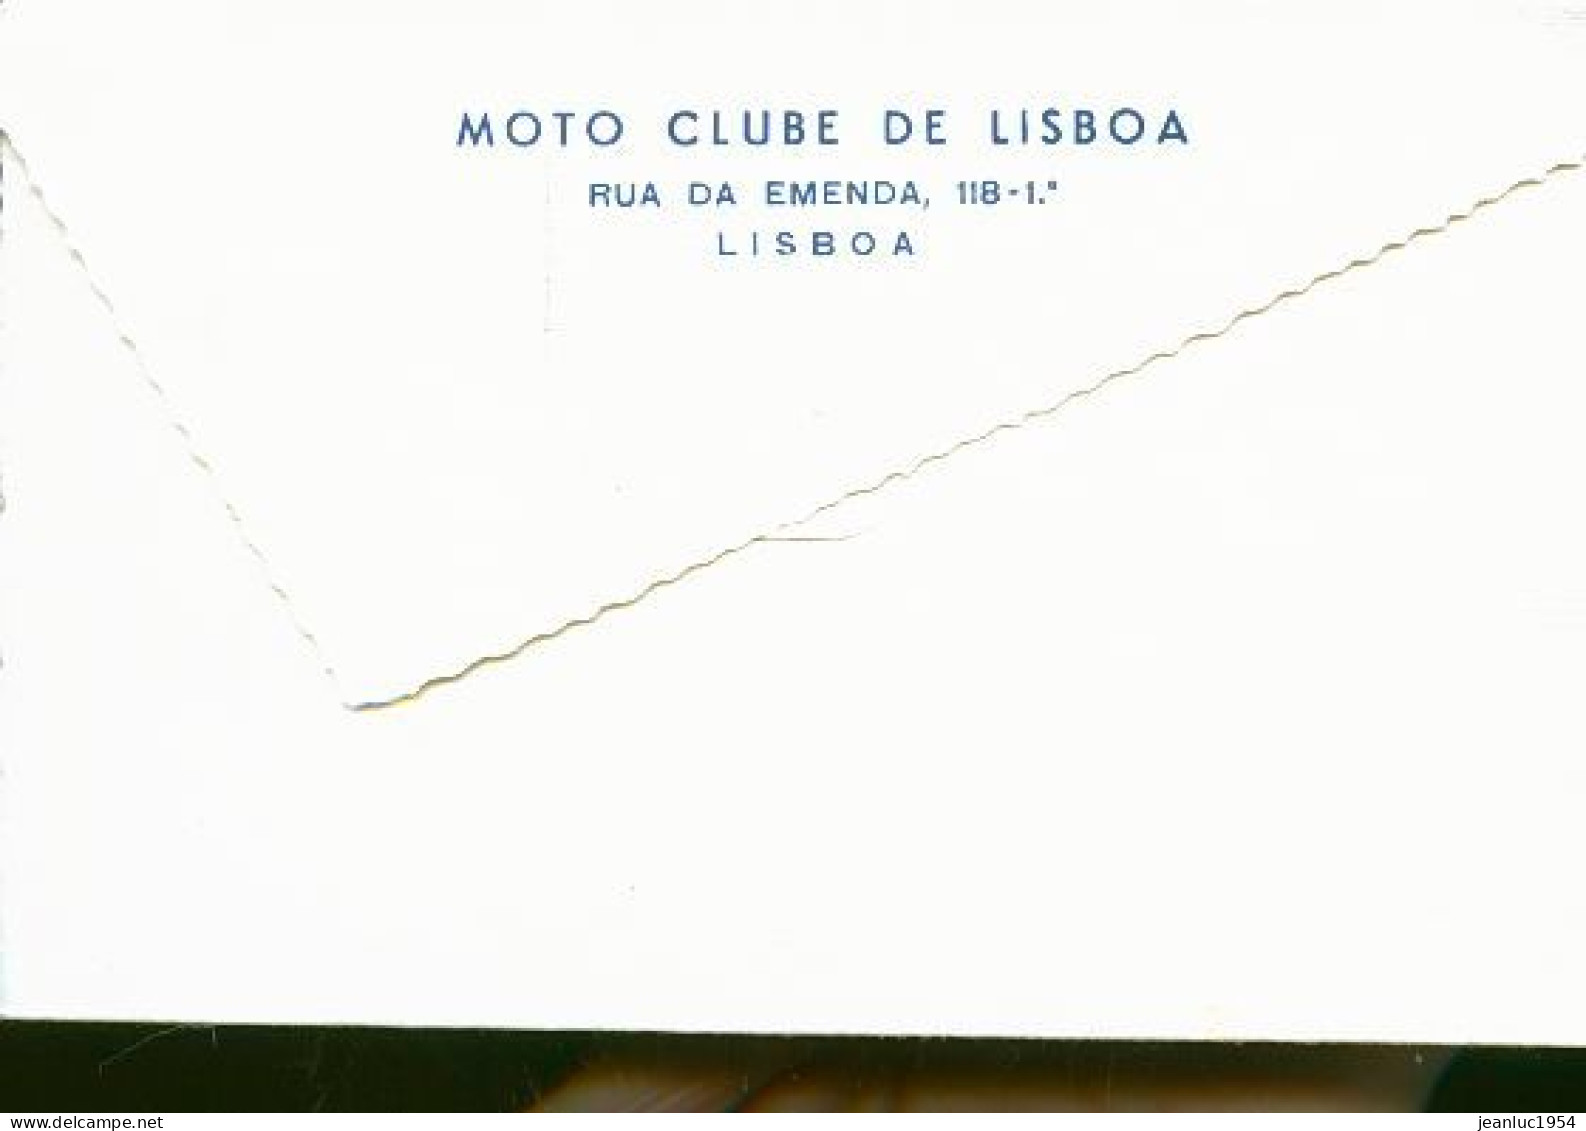 MOTO CLUBE DE LISBOA - Motorräder